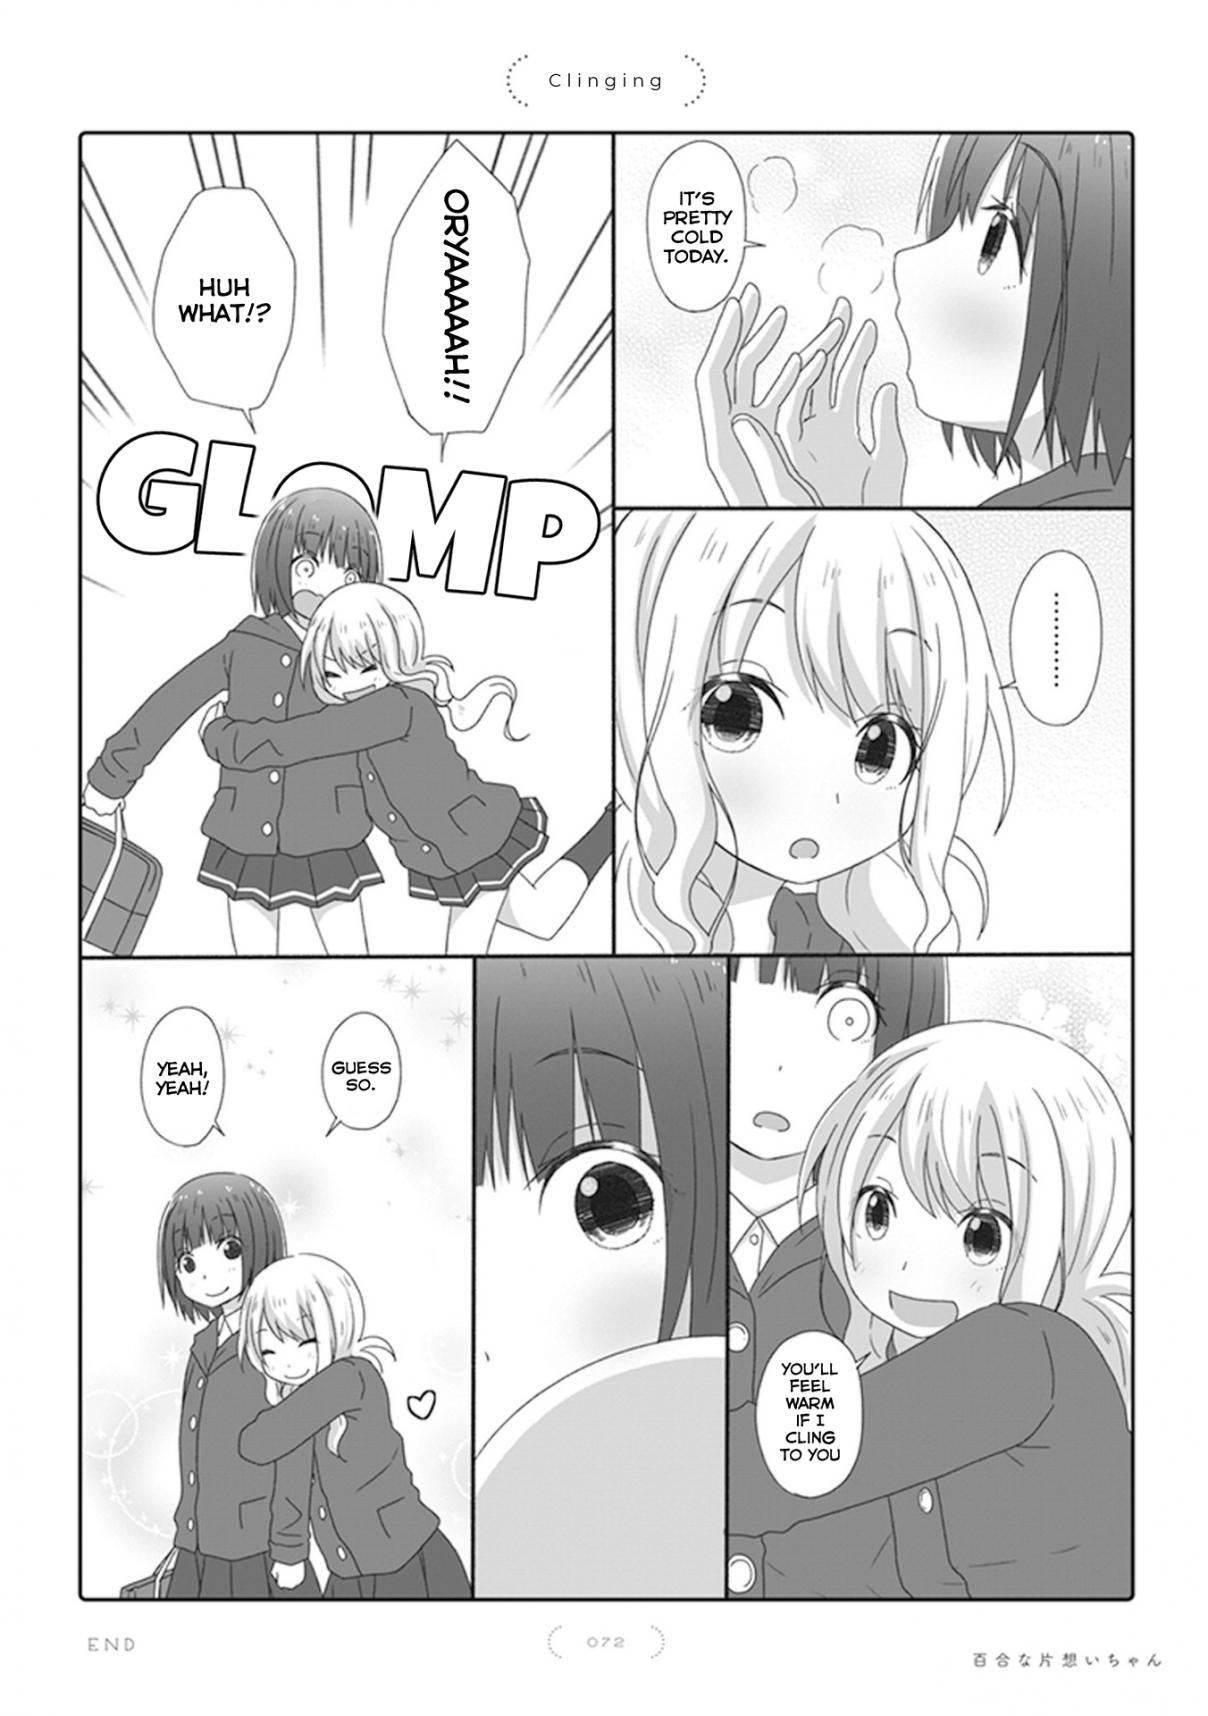 Yuri na Kataomoi chan Vol. 1 Ch. 40 Clinging